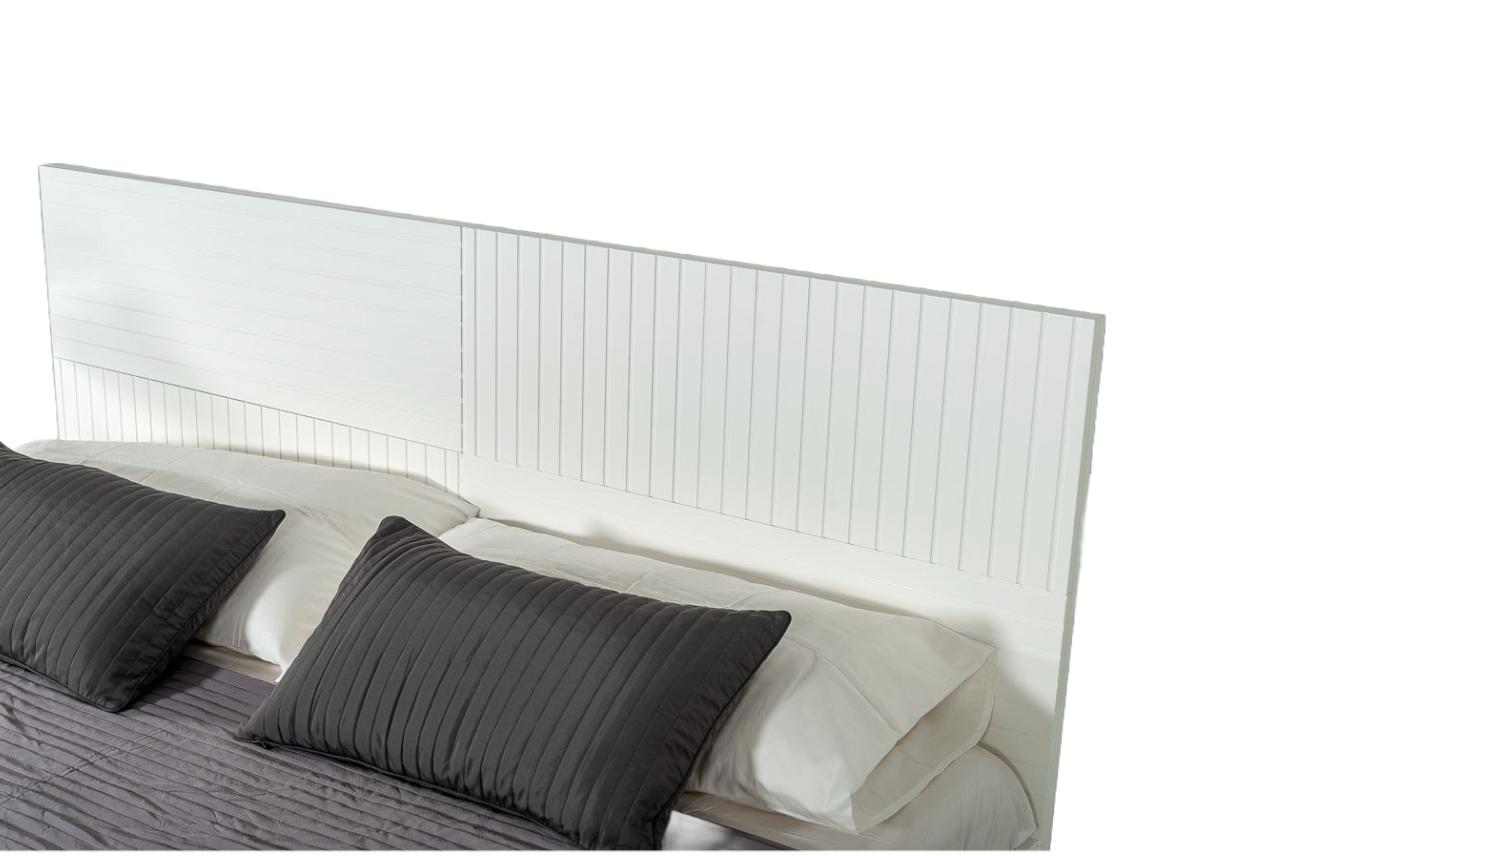 

    
White Matte Finish Queen Size Panel Bed by VIG Nova Domus Valencia
